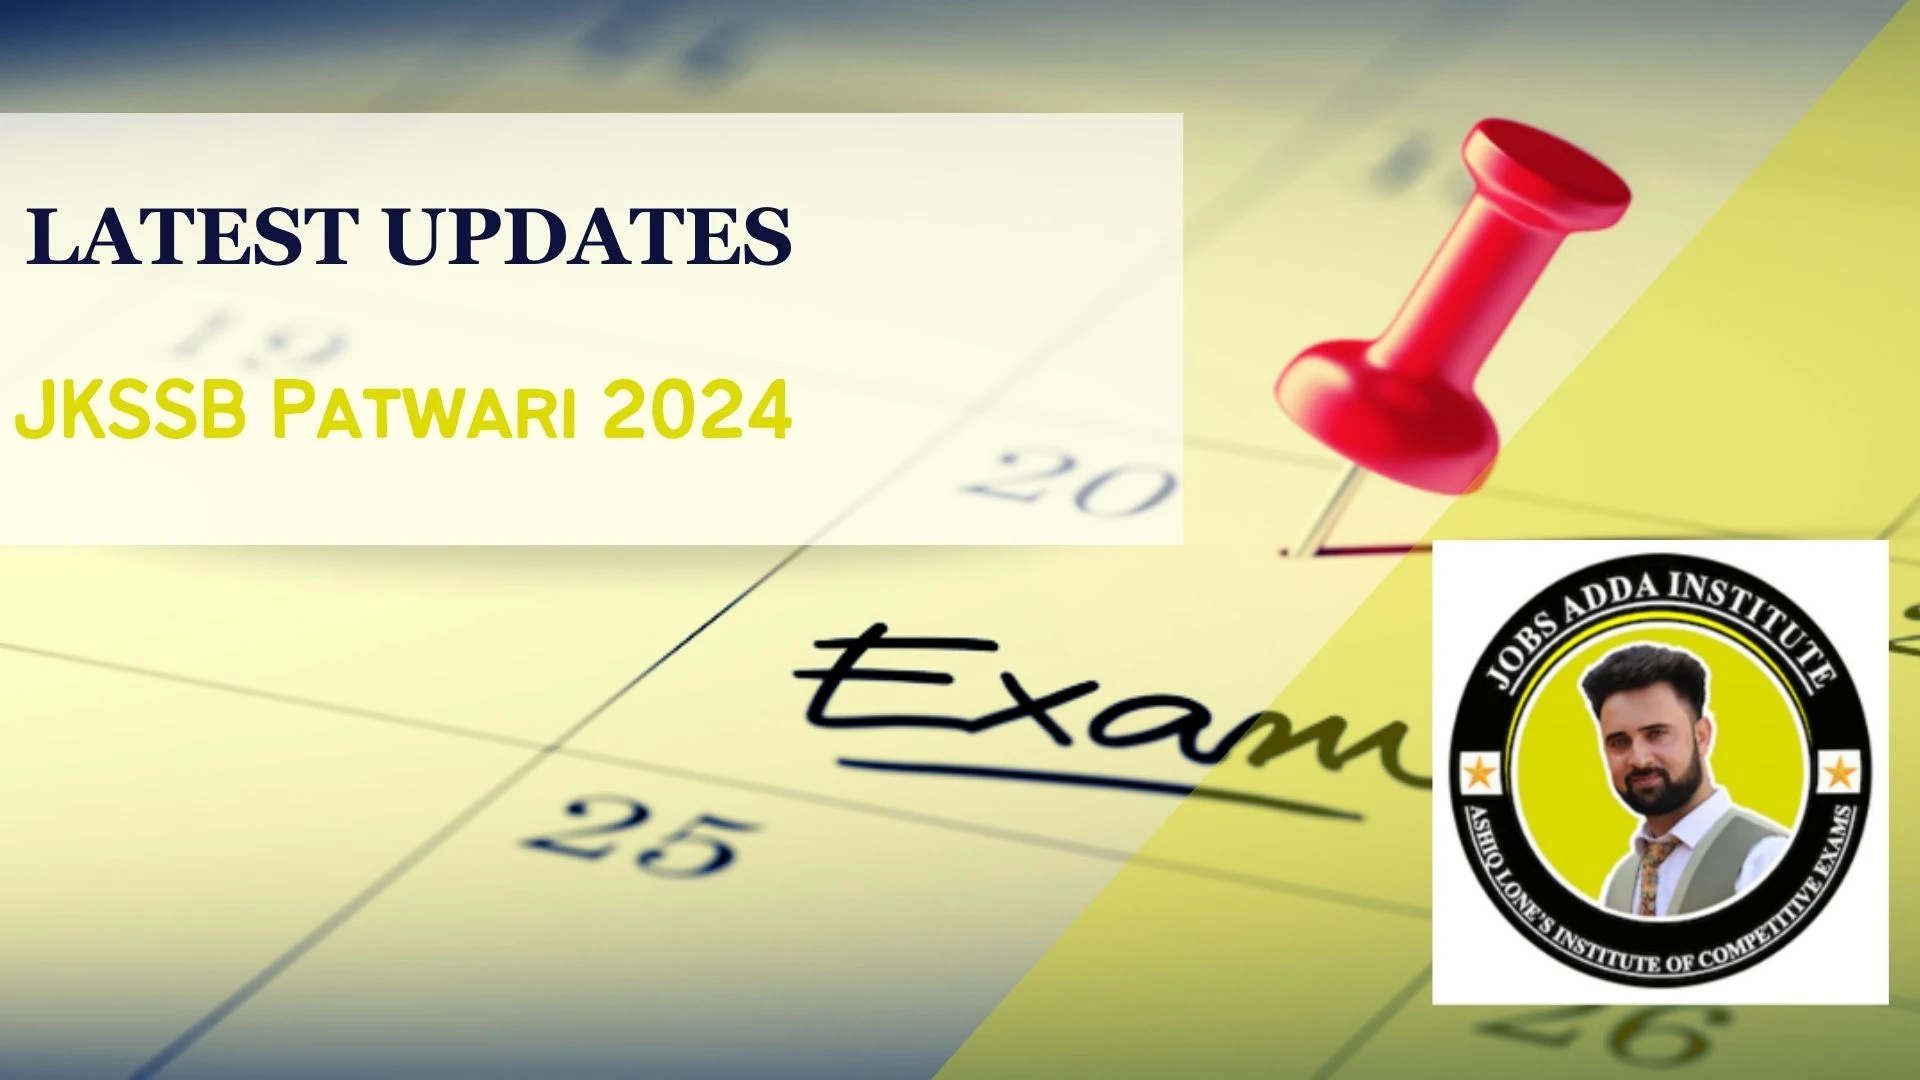 JKSSB Patwari 2024 Latest Updates The Date of Exam is 31March2024